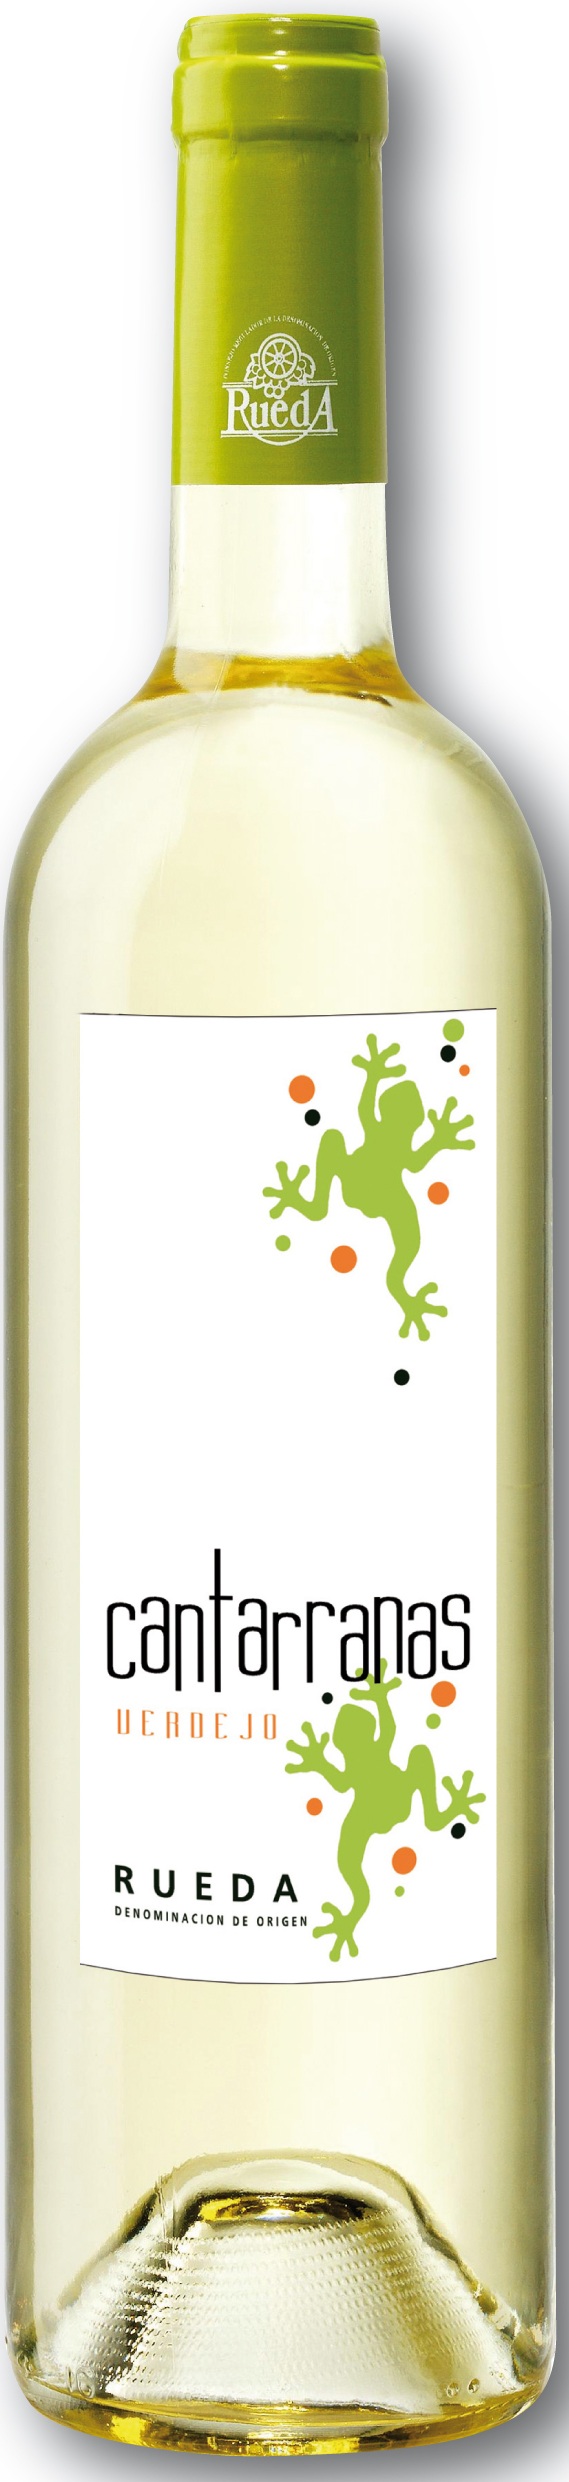 Image of Wine bottle Cantarranas Verdejo